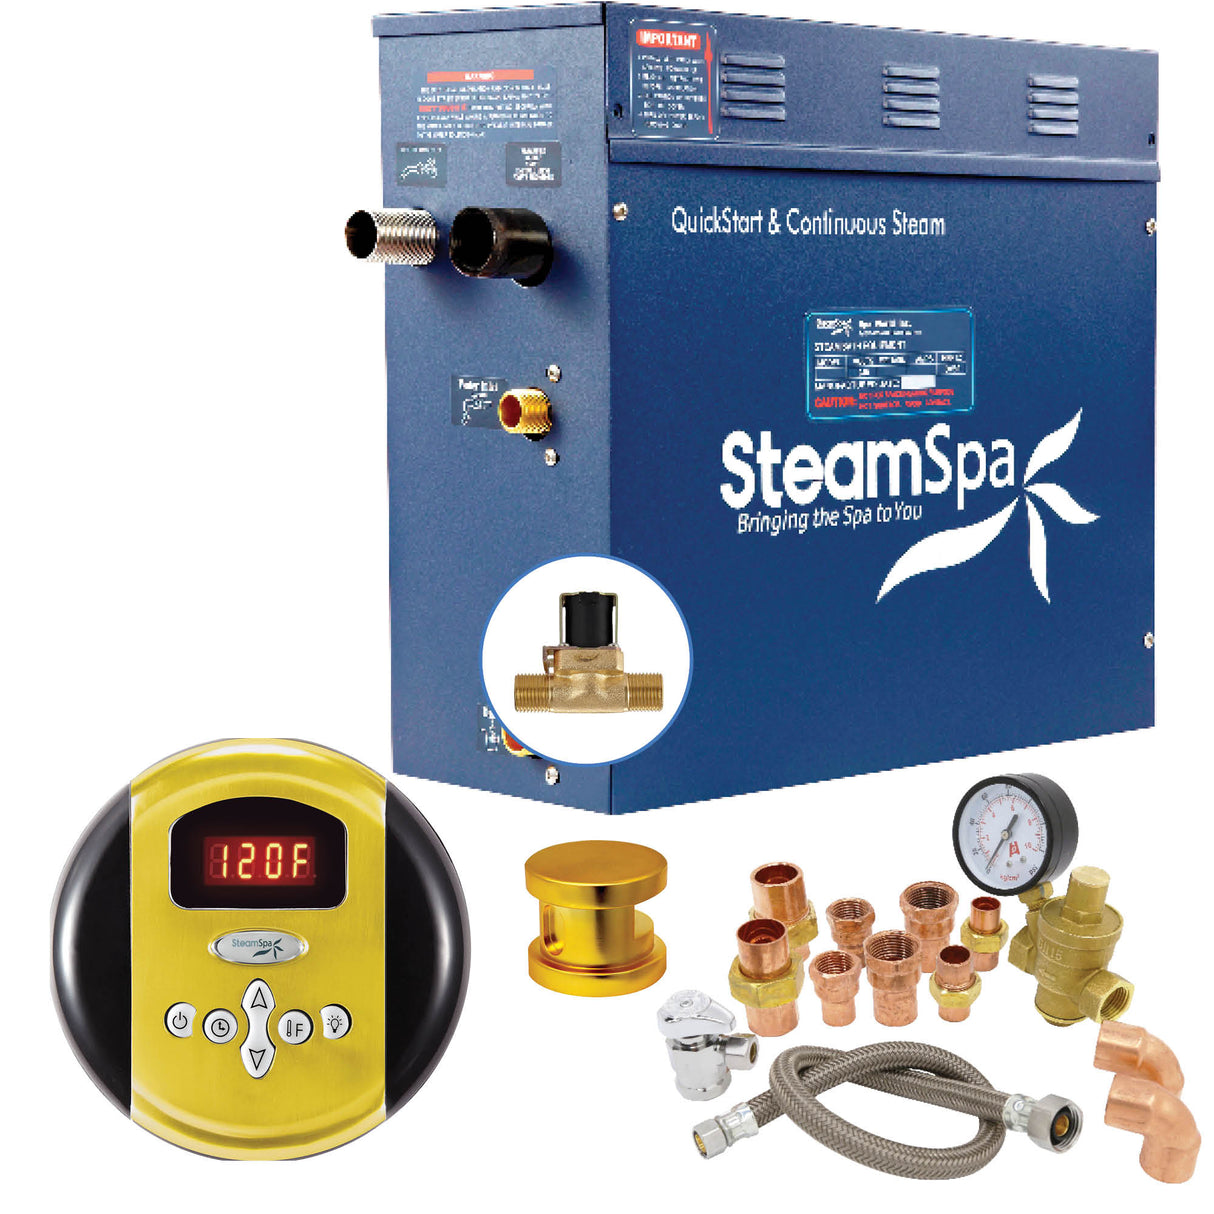 SteamSpa Premium 6 KW QuickStart Acu-Steam Bath Generator Package with Built-in Auto Drain in Gold PRR600GD-A